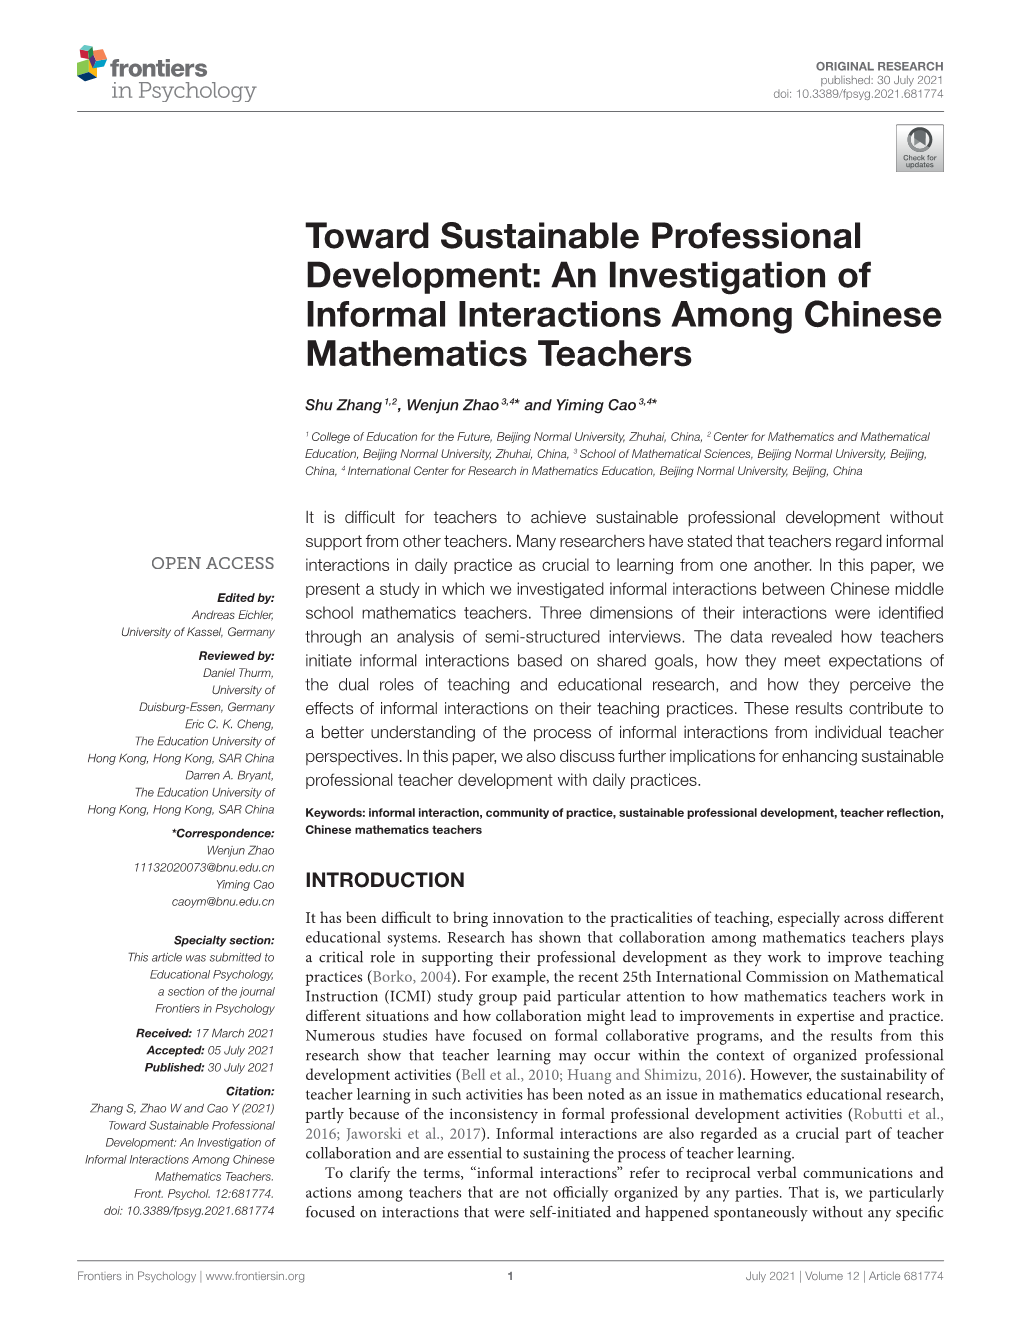 An Investigation of Informal Interactions Among Chinese Mathematics Teachers